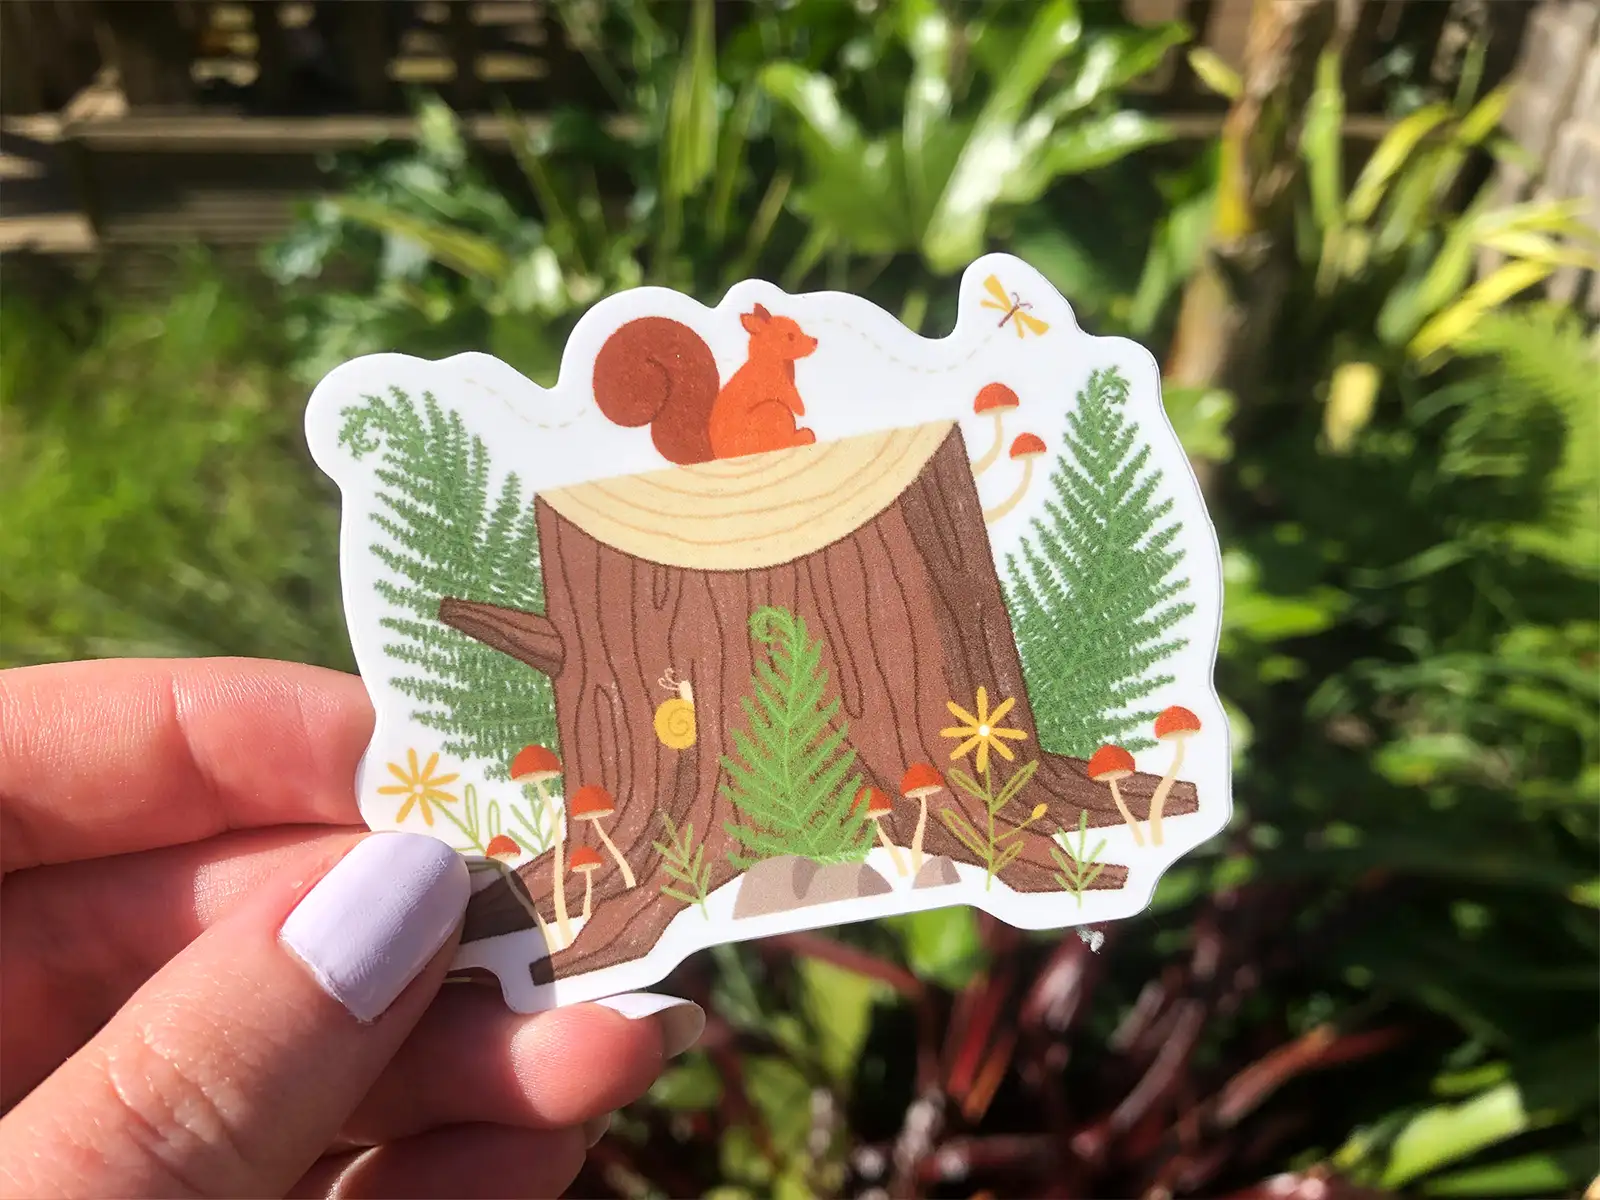 Tree stump sticker with a cute squirrel